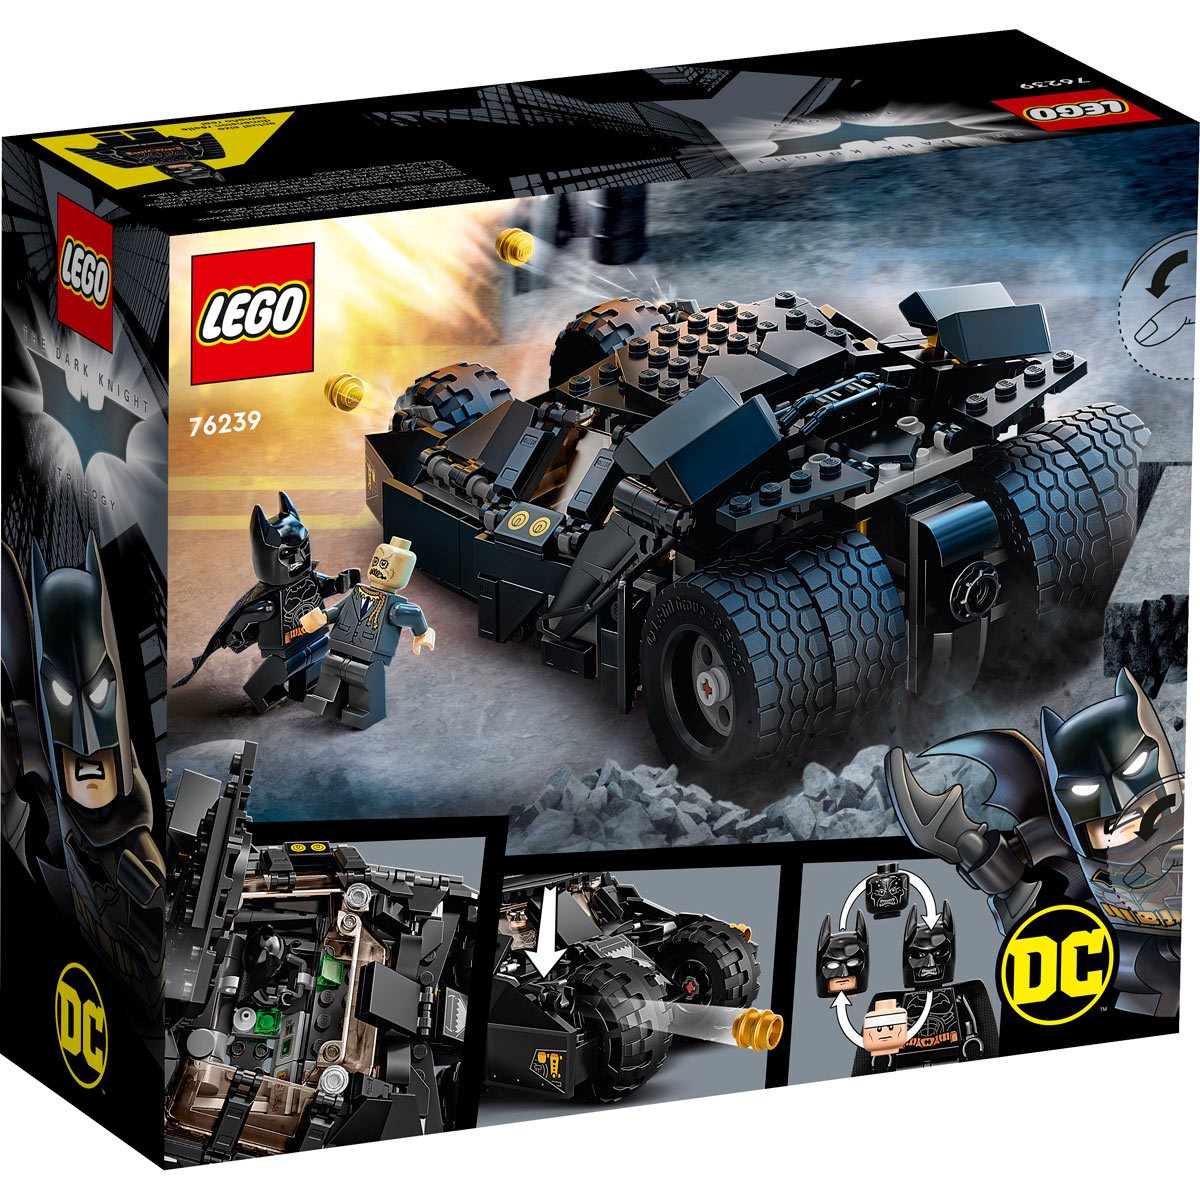 LEGO DC Comics Batmobile Tumbler: Scarecrow Showdown